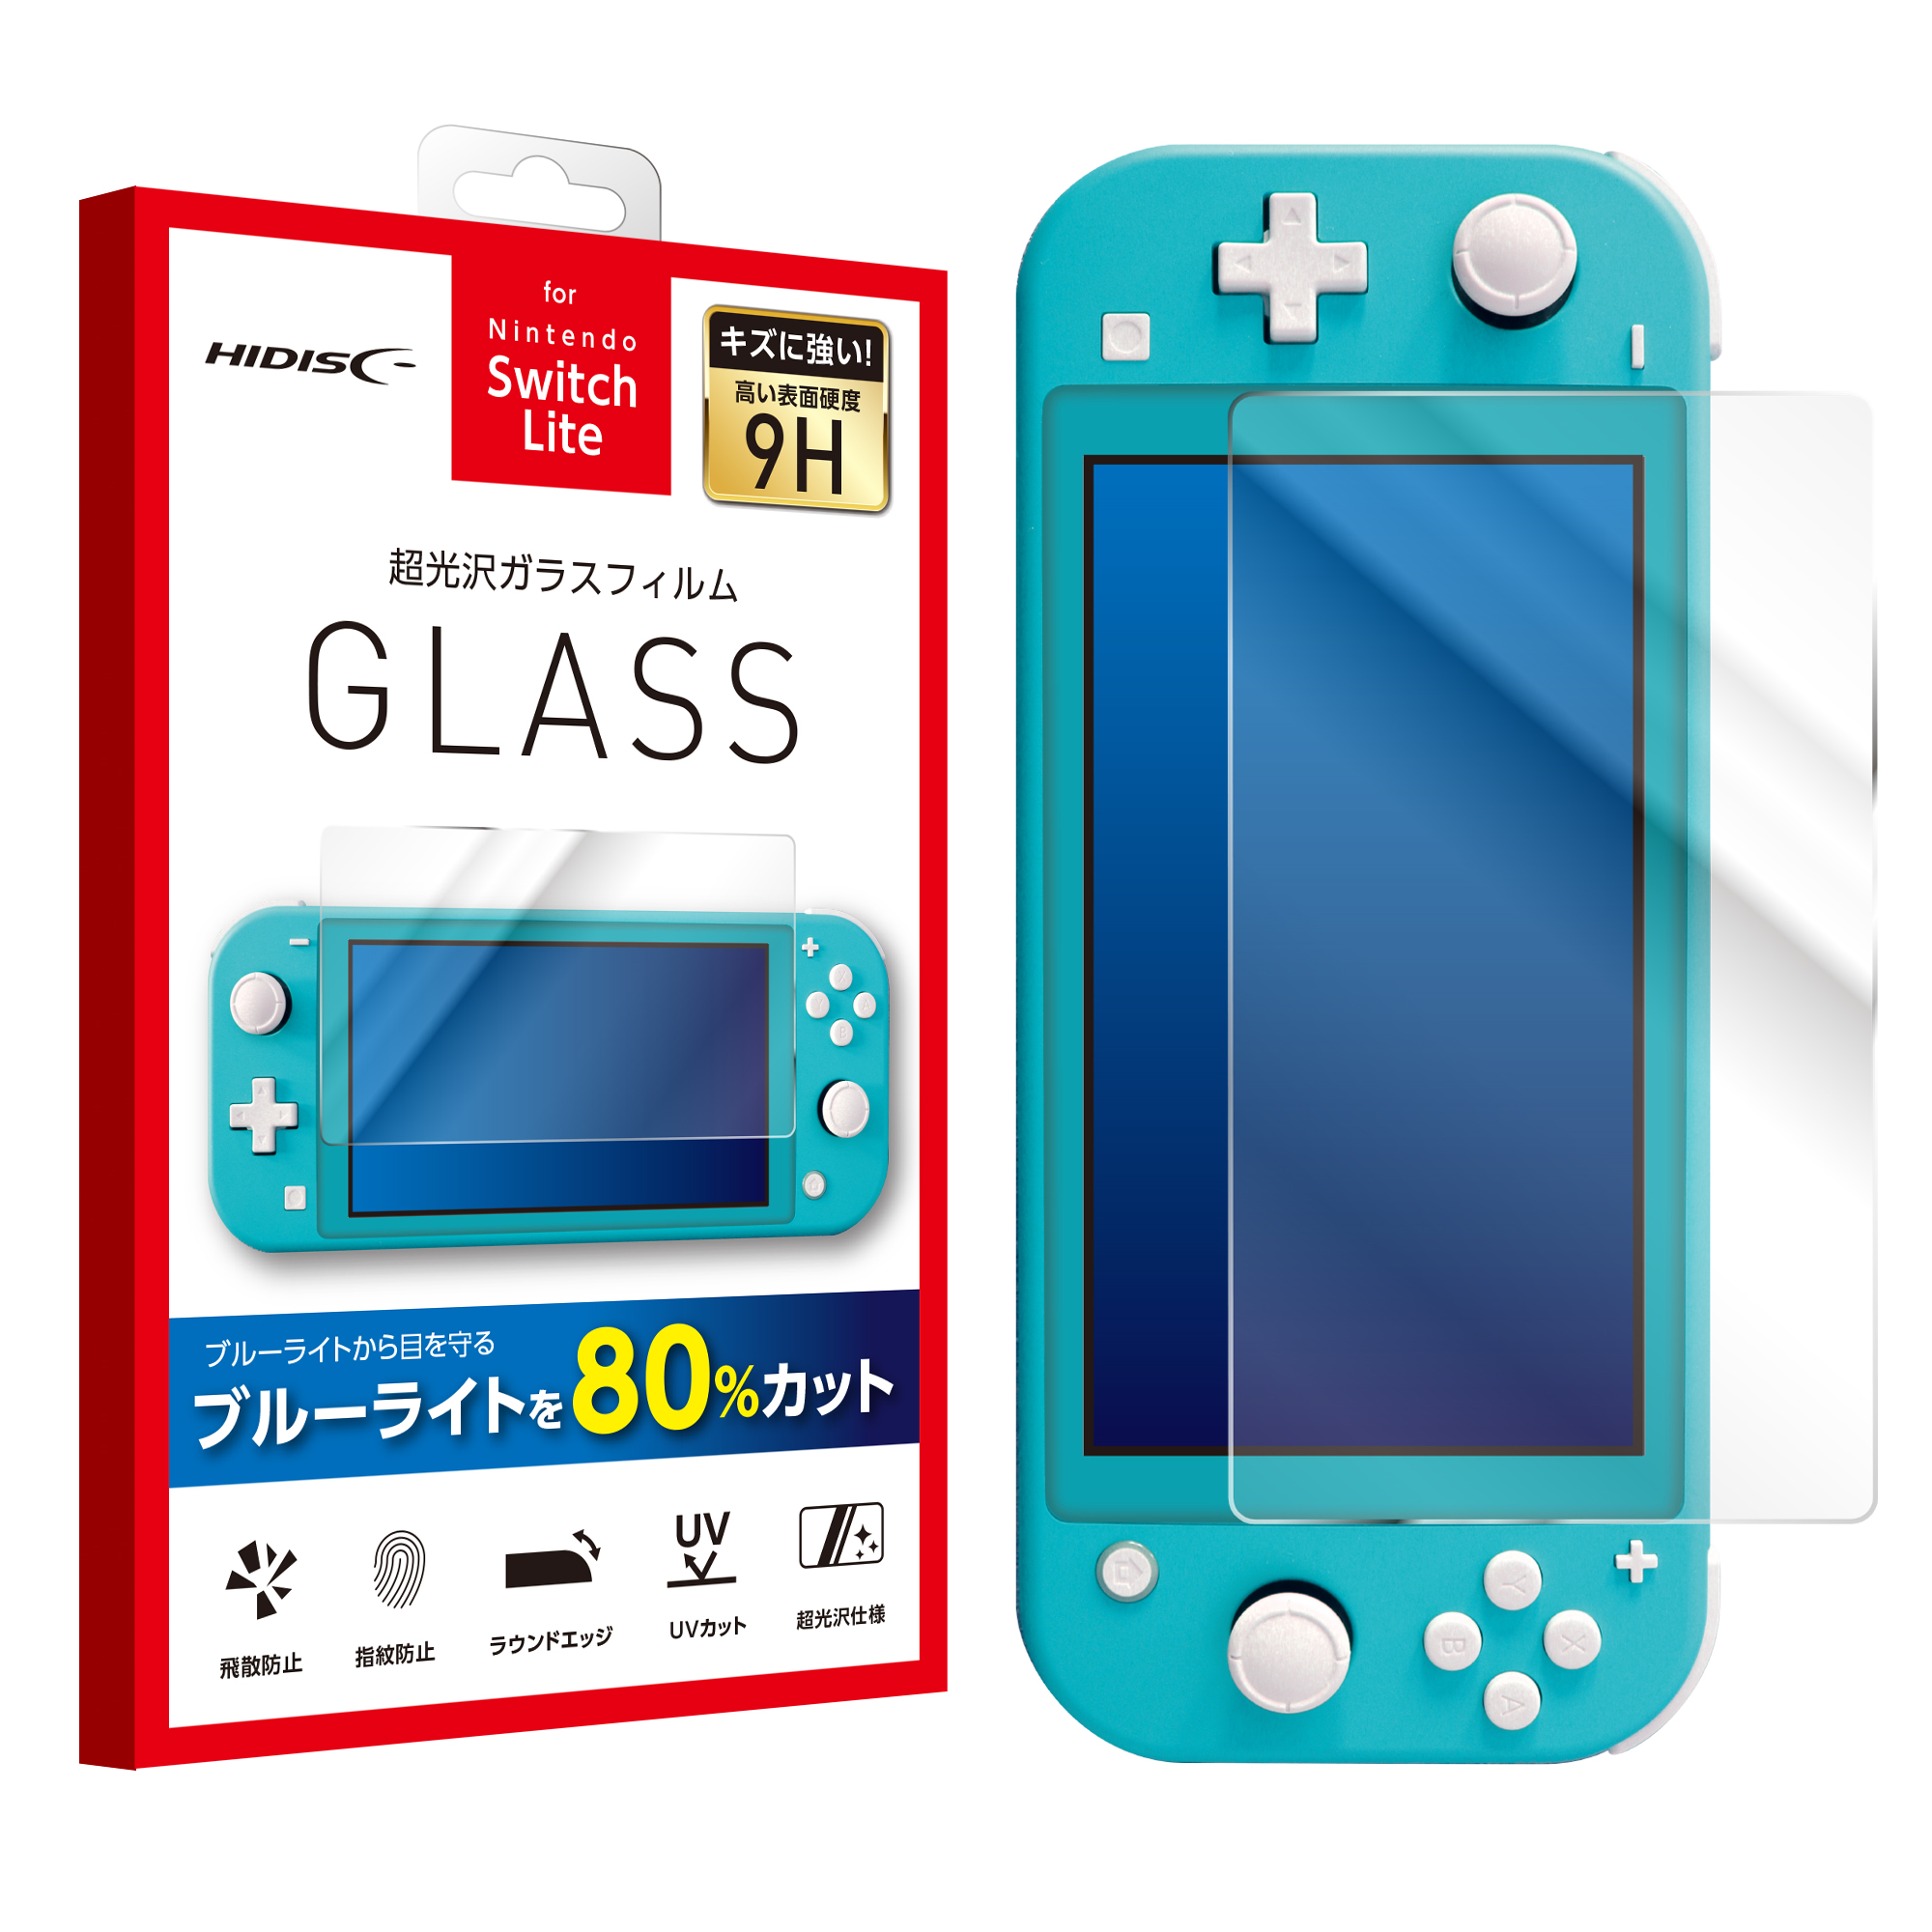 HIDISC 2.5D強化保護ガラスフィルム for Nintendo Switch Lite ブルー